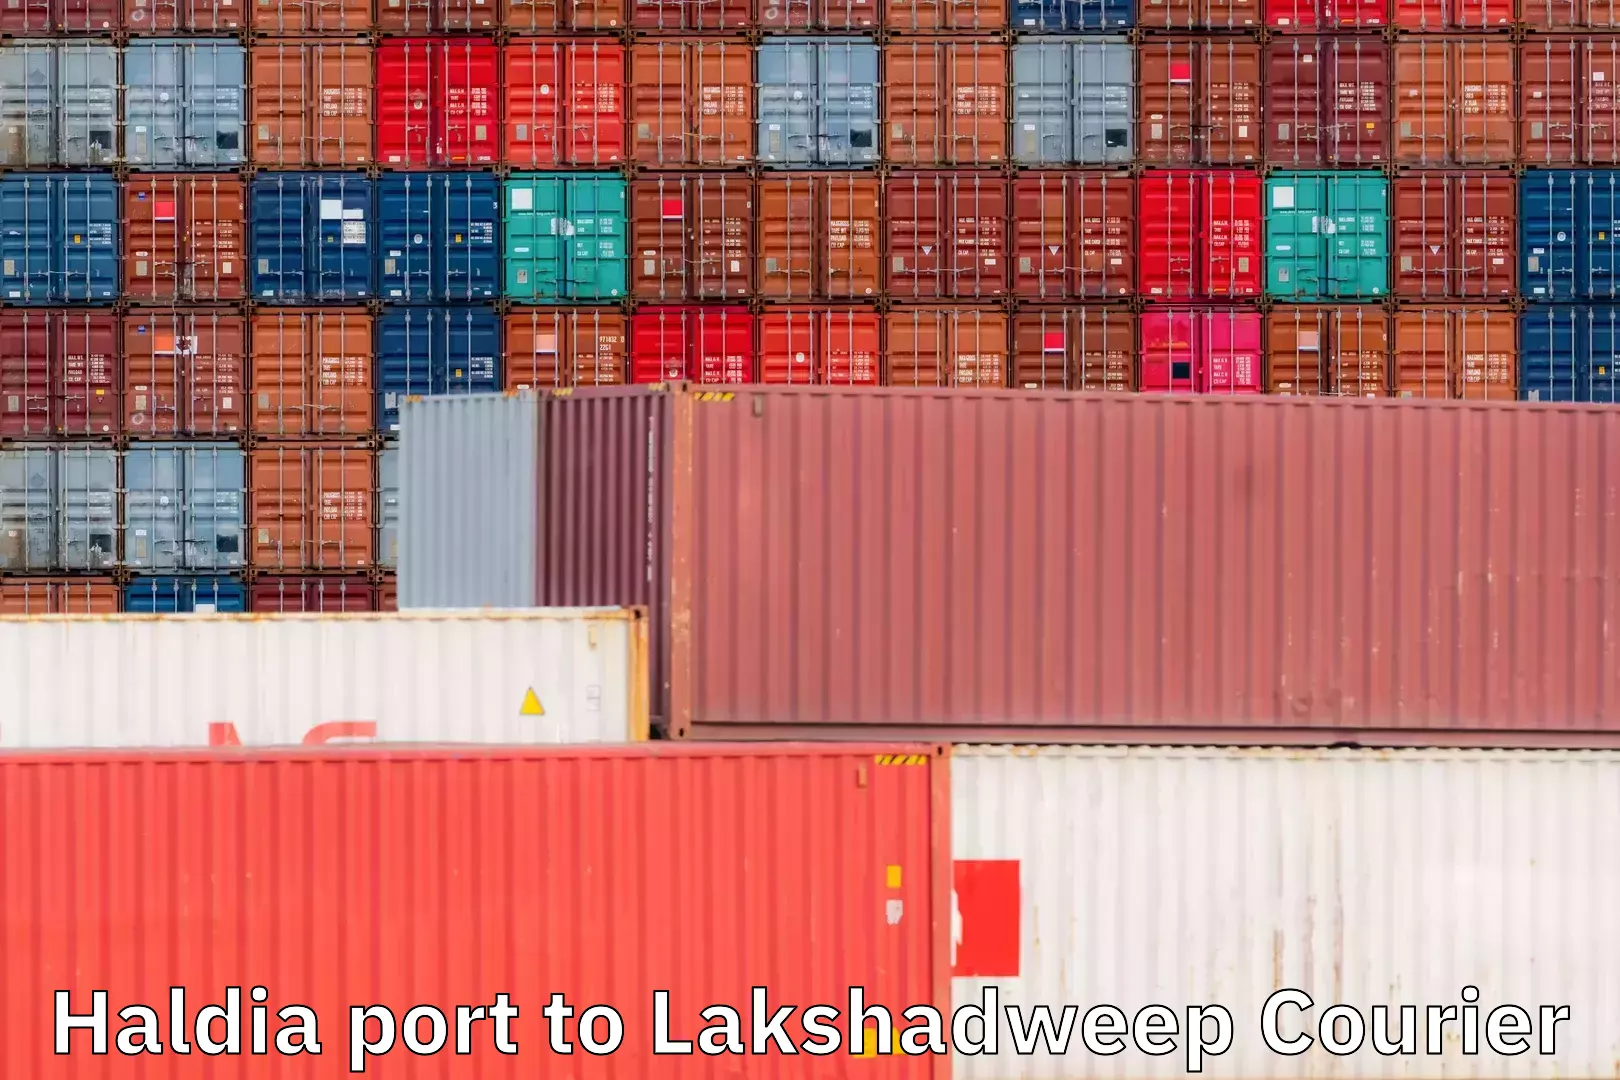 Smart shipping technology Haldia port to Lakshadweep